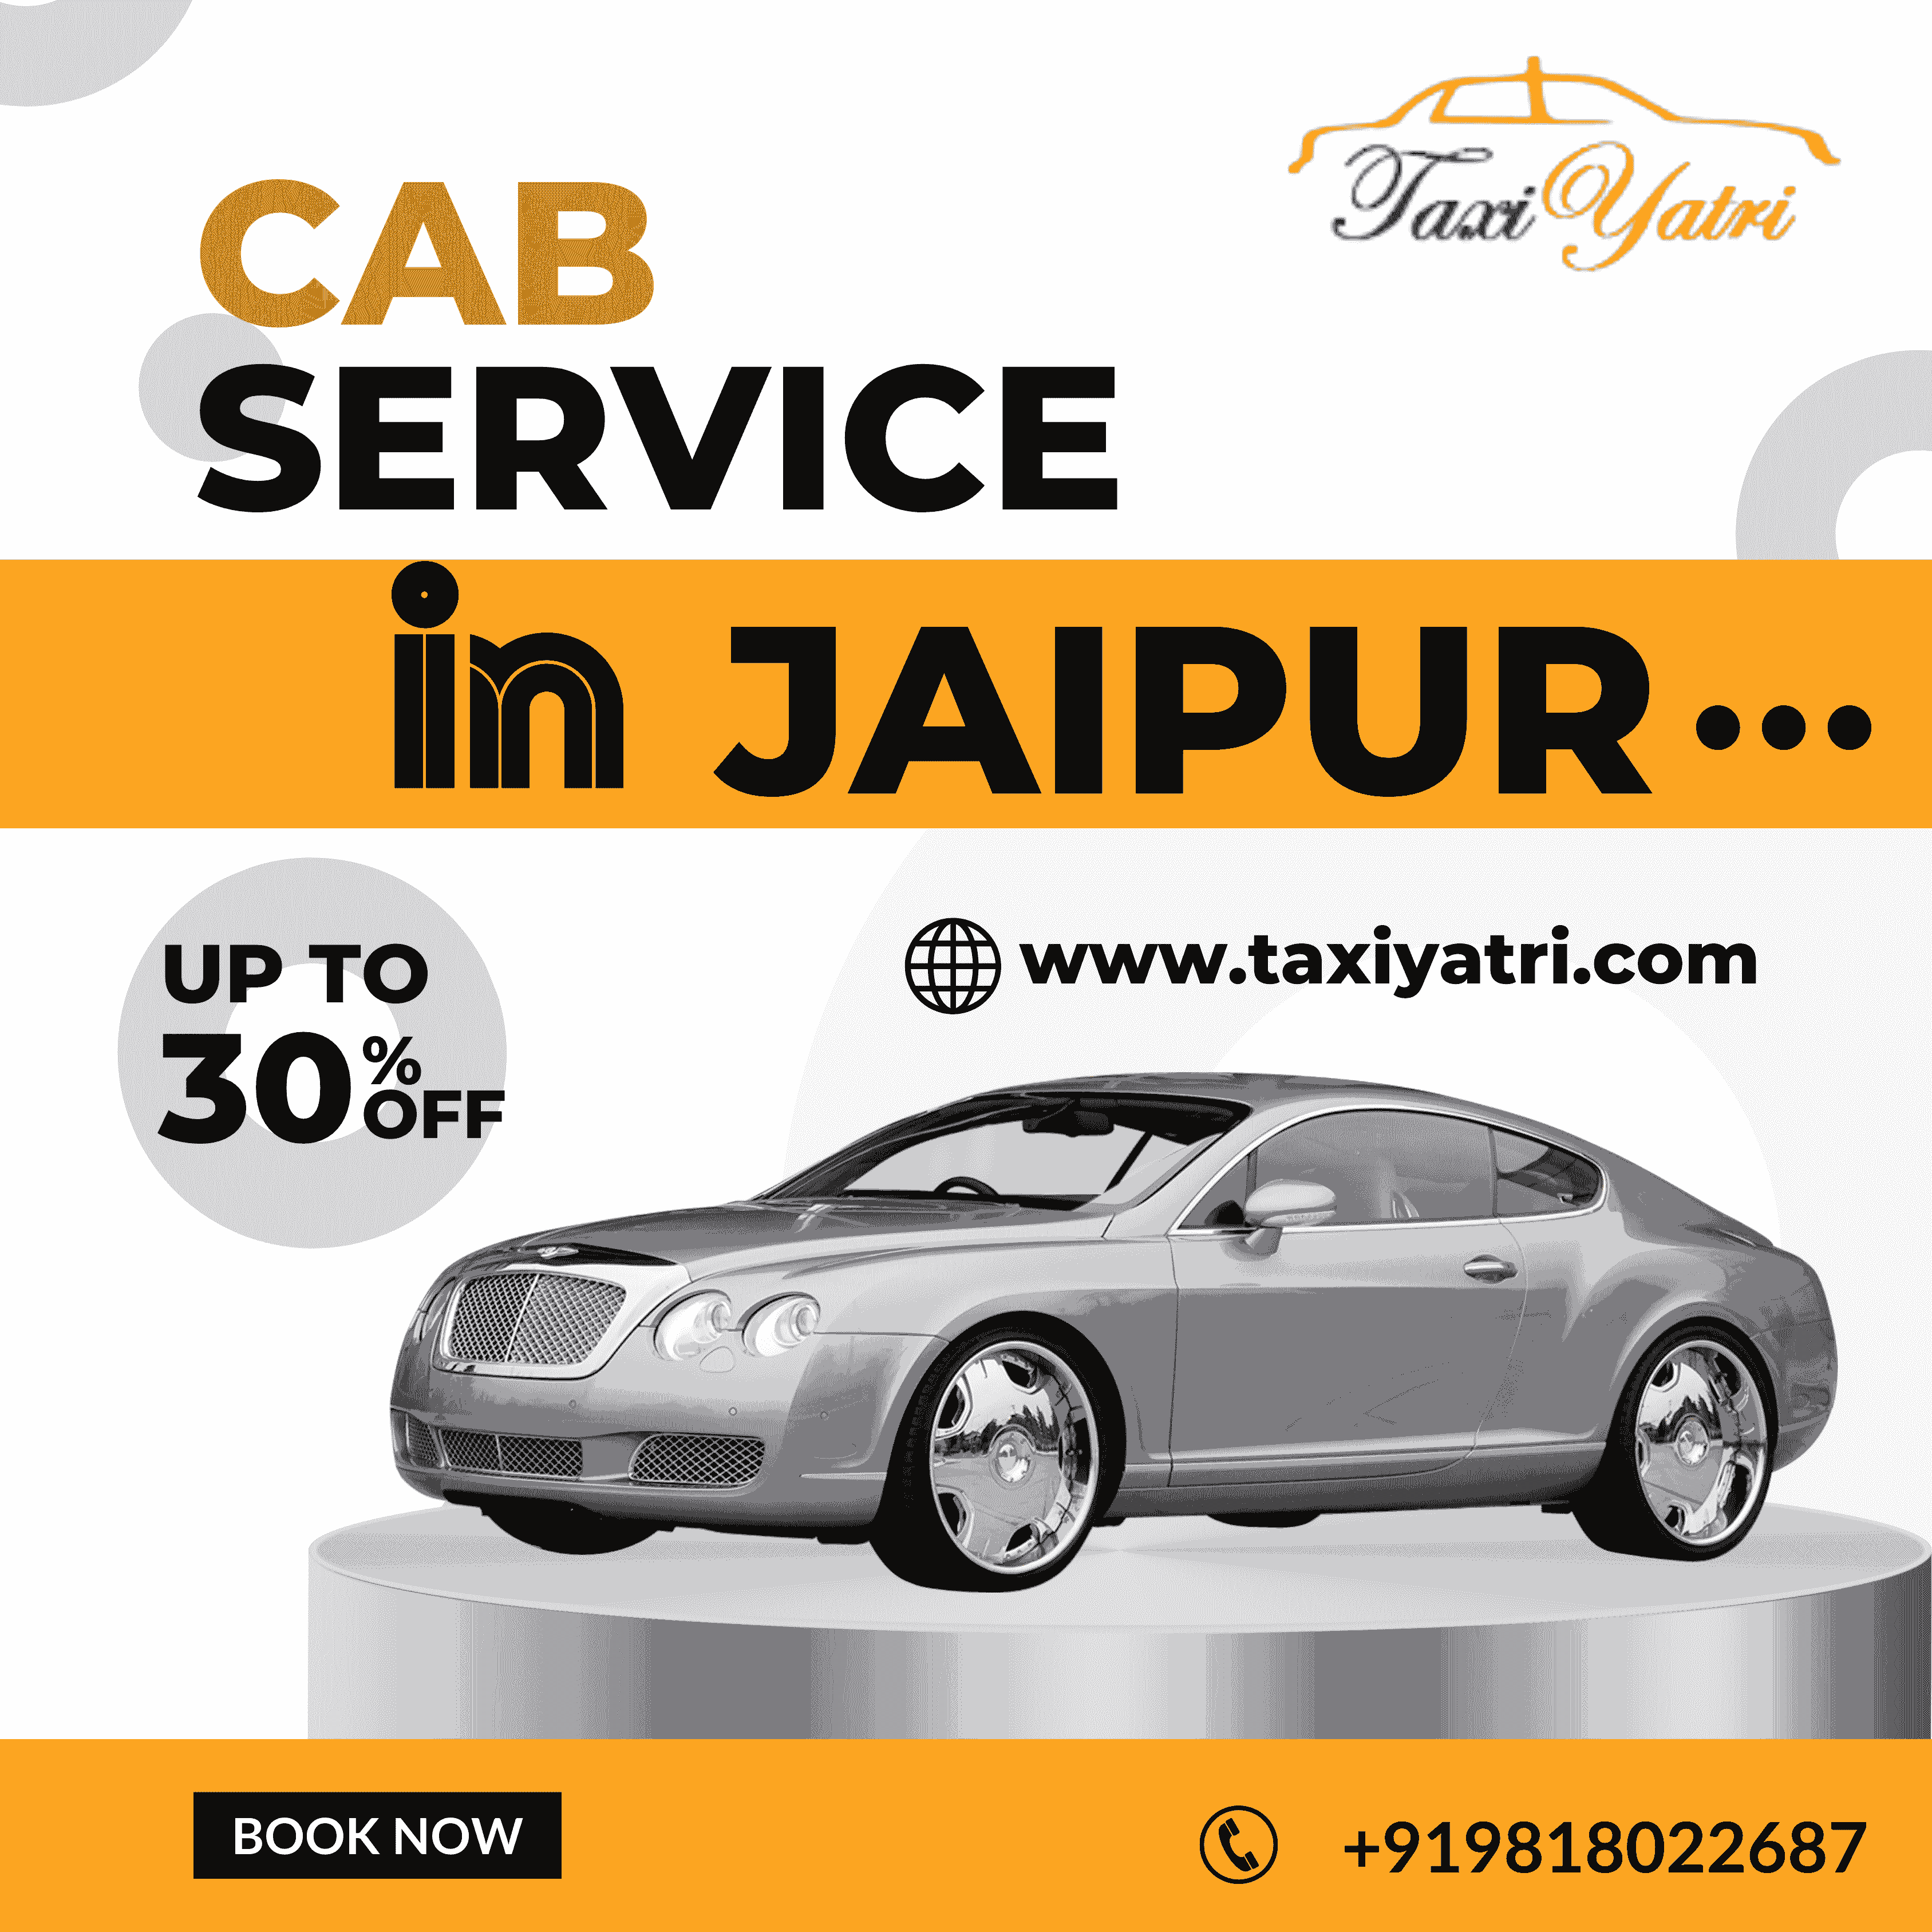 Cab Service in Jaipur - Jaipur Other